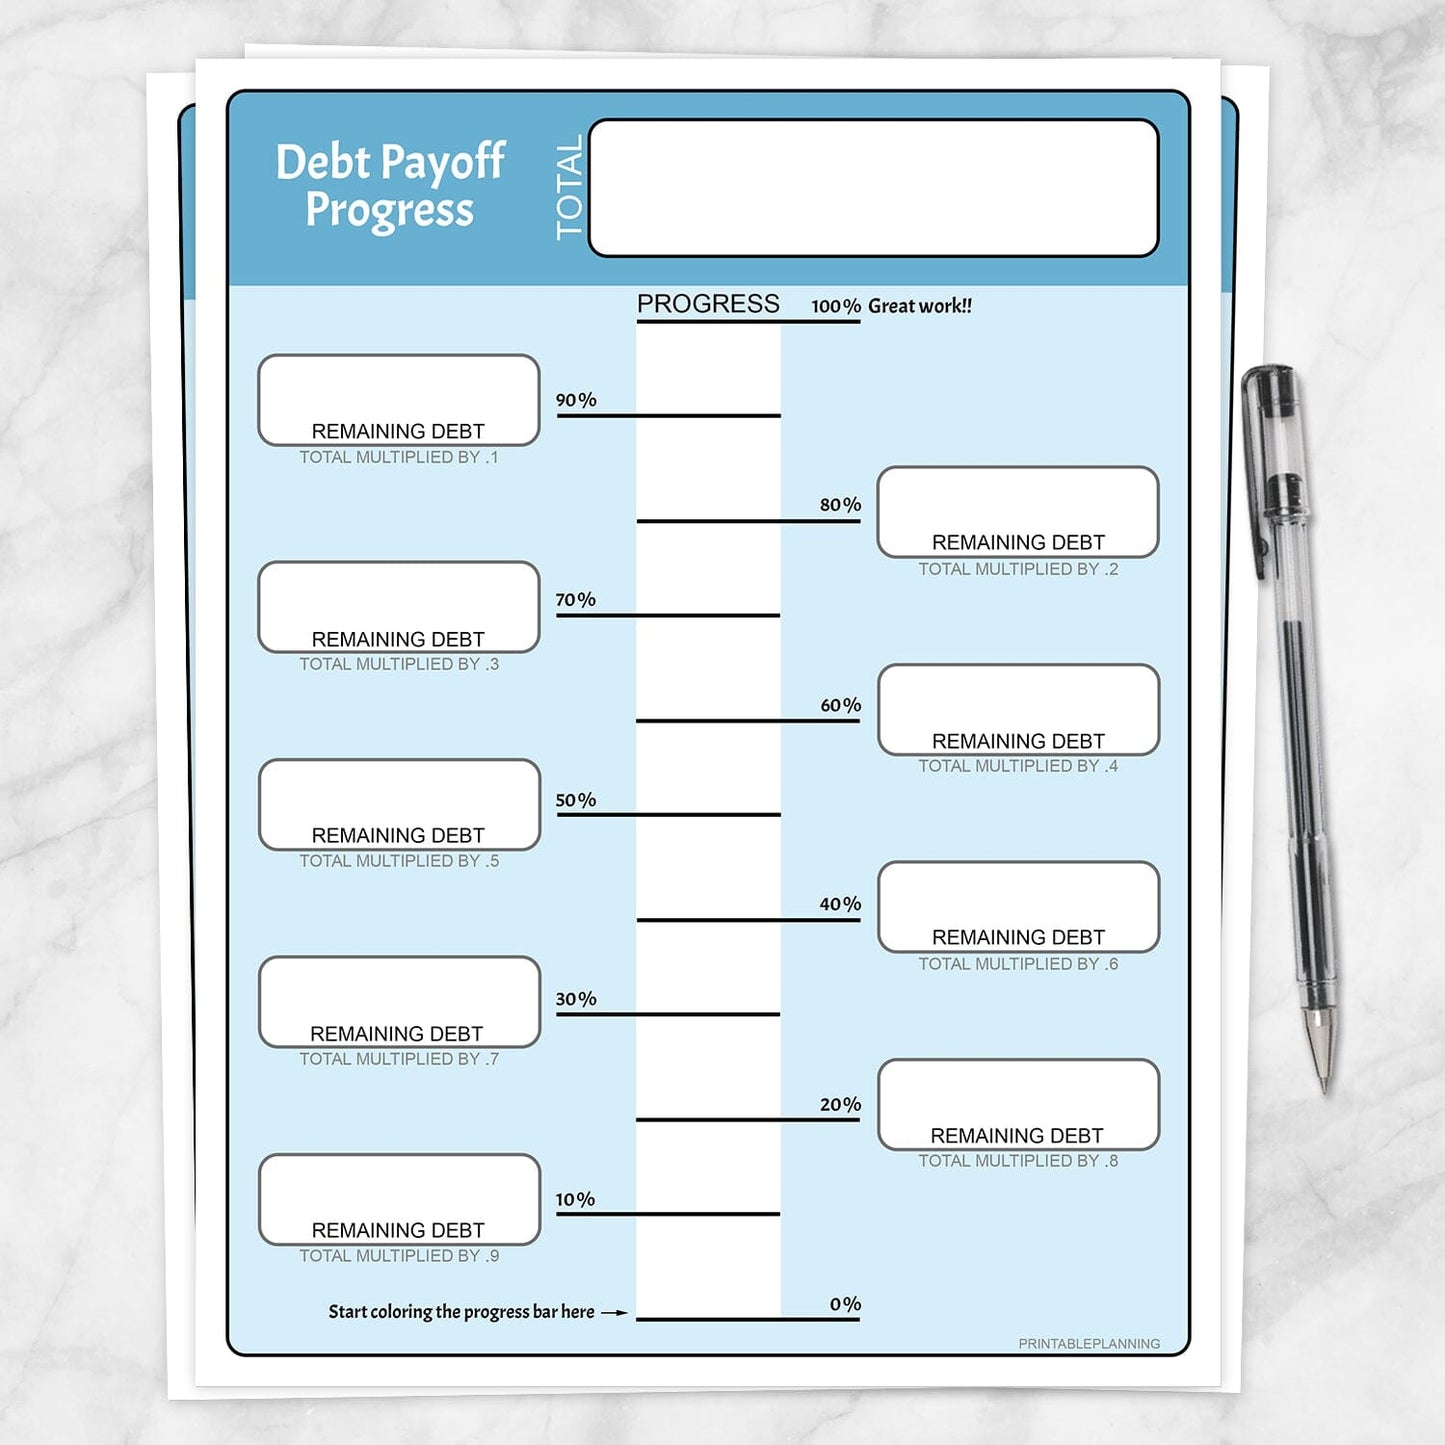 Printable Remaining Debt Payoff Progress Bar Worksheets in Blue at Printable Planning.